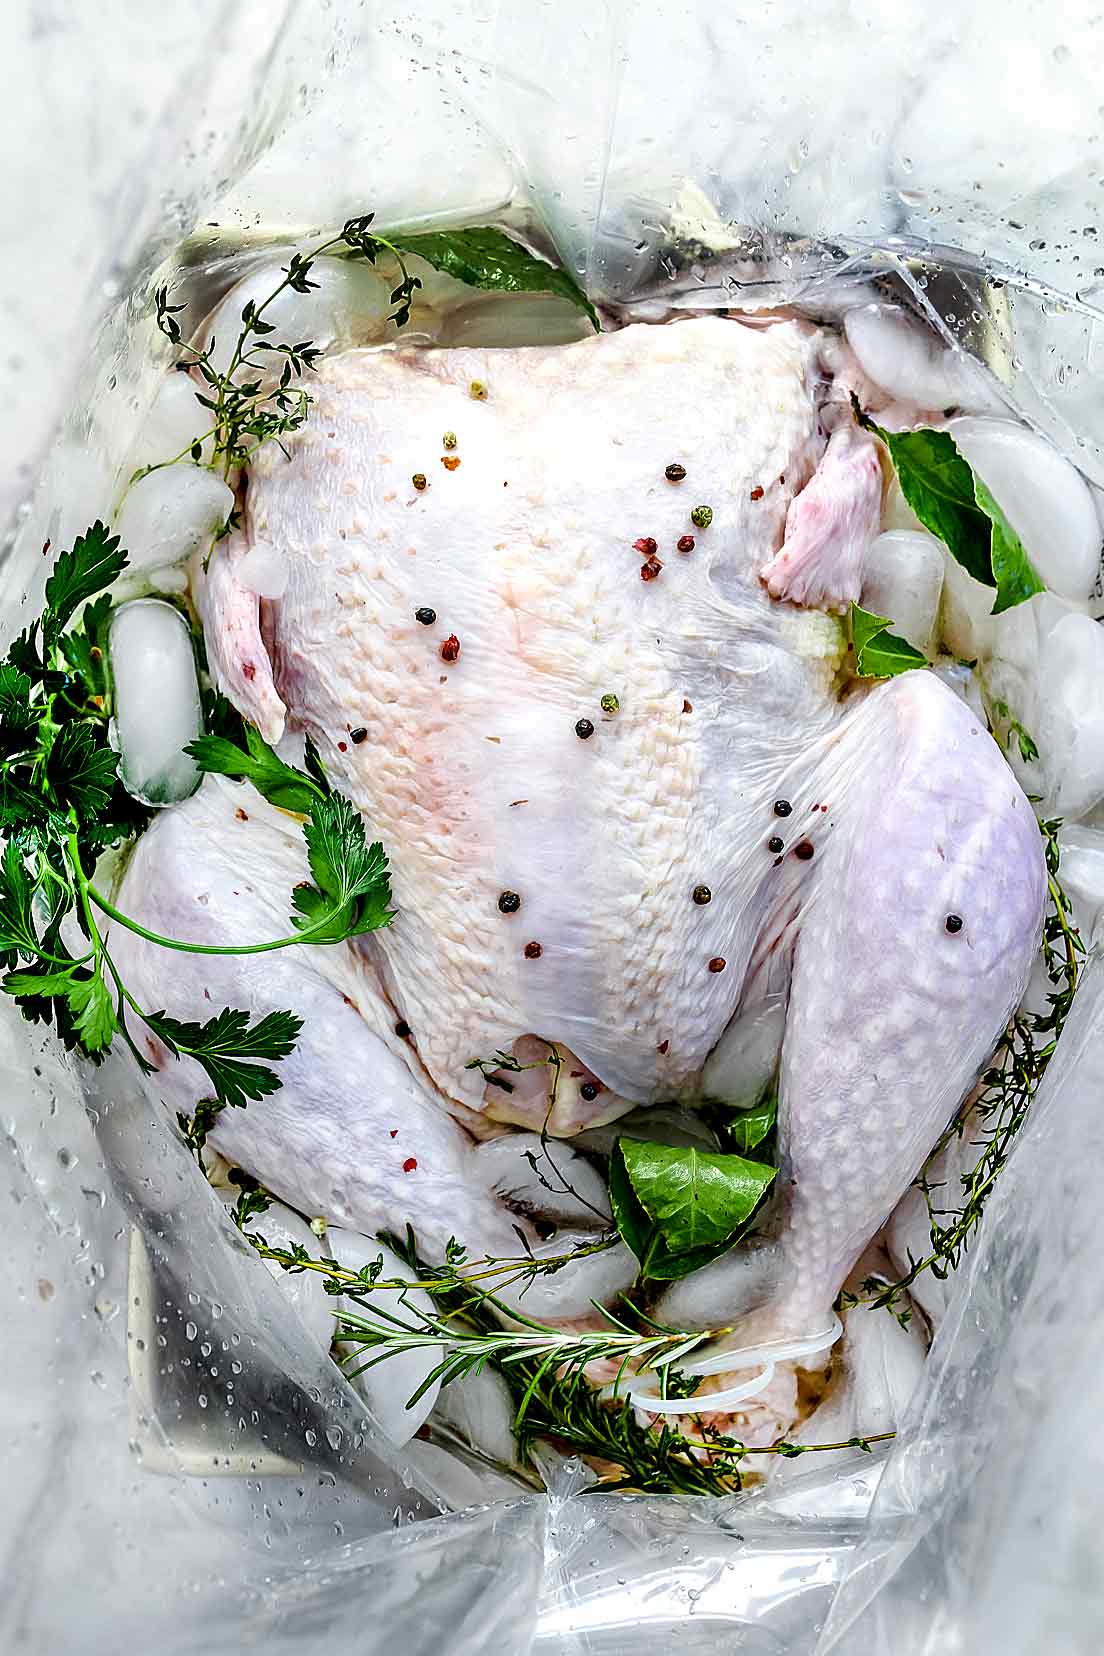 How to Brine a Turkey—A Basic Brine with Enhancements - 101